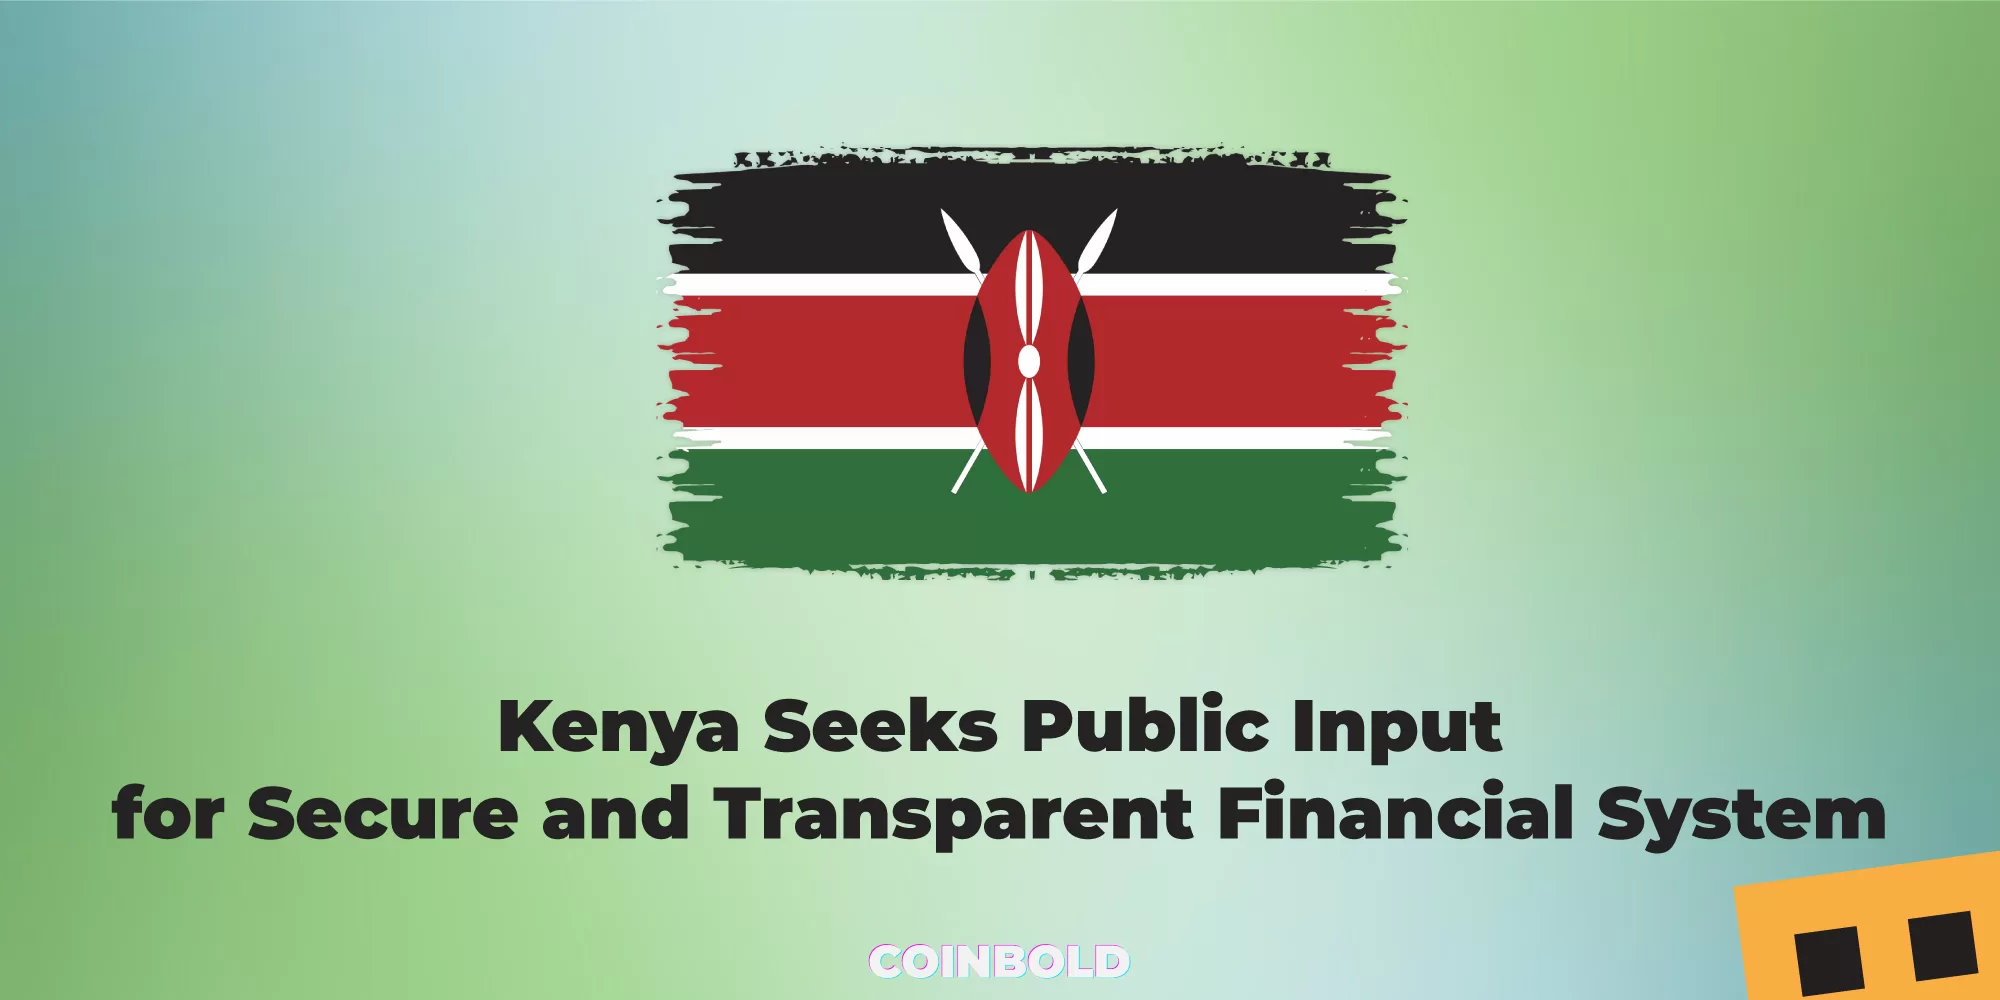 Kenya Seeks Public Input for Secure and Transparent Financial System